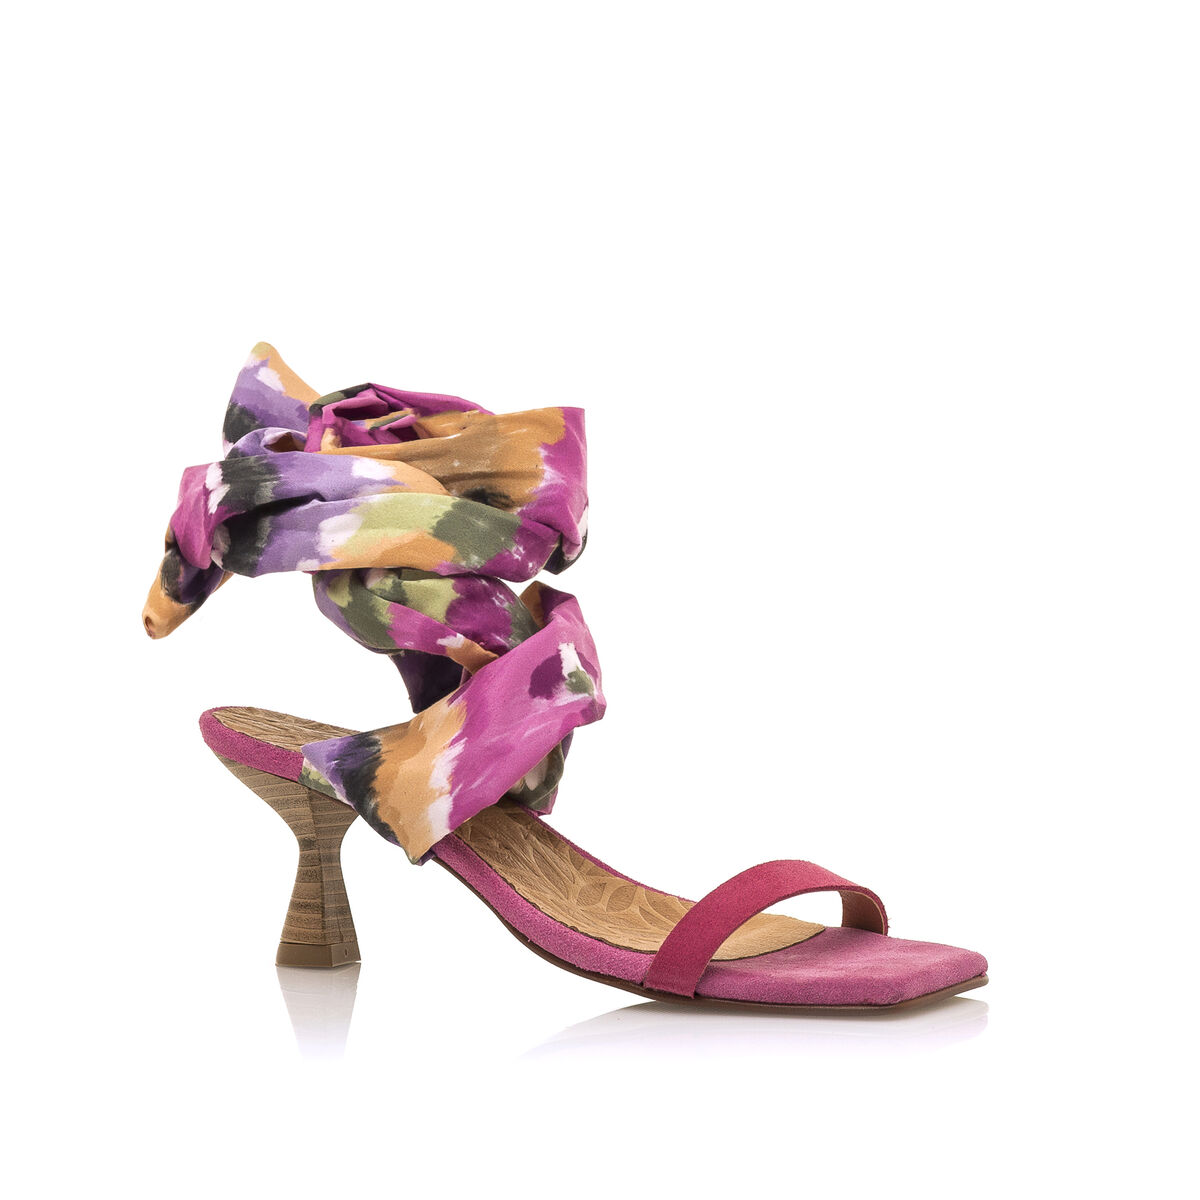 Sandalias de tacon de Mujer modelo ANNIE de MTNG image number 1